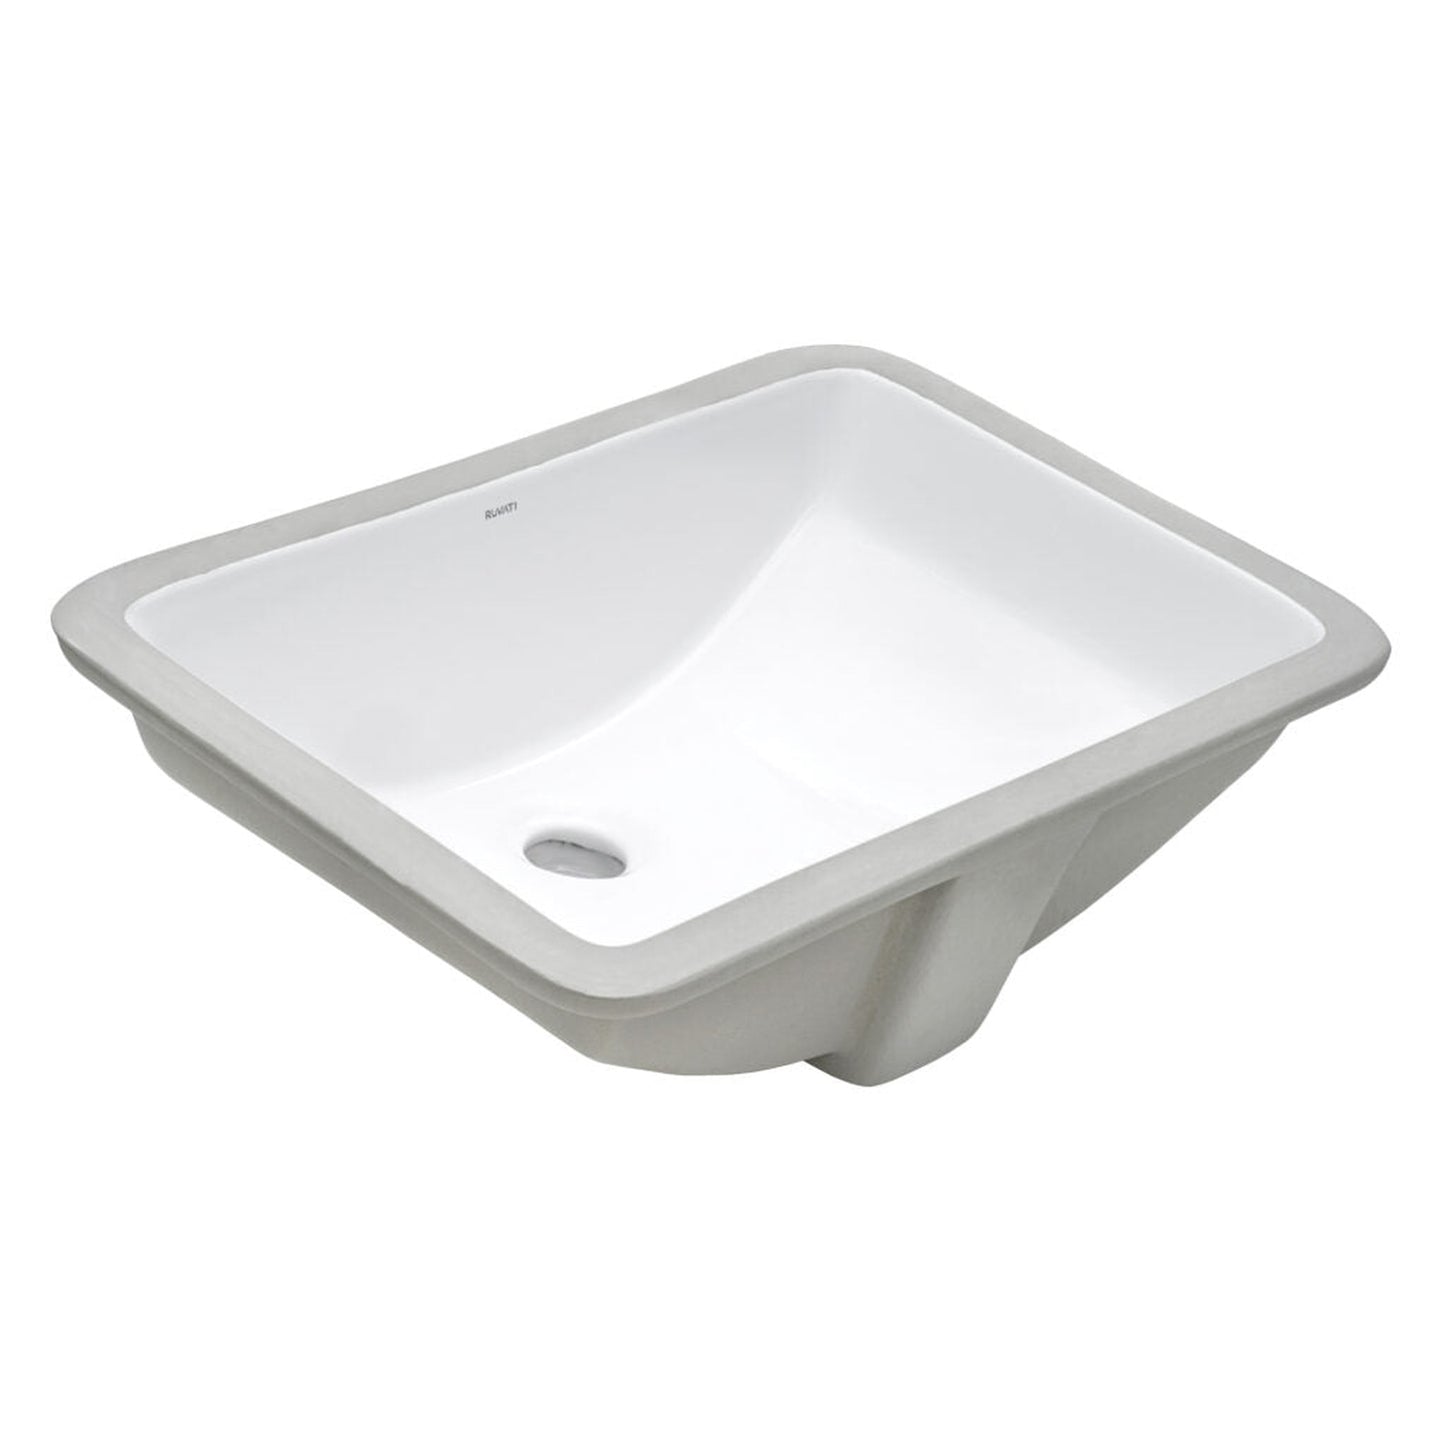 Ruvati Krona 21” x 14” Rectangular White Porcelain Ceramic with Overflow Undermount Bathroom Vanity Sink